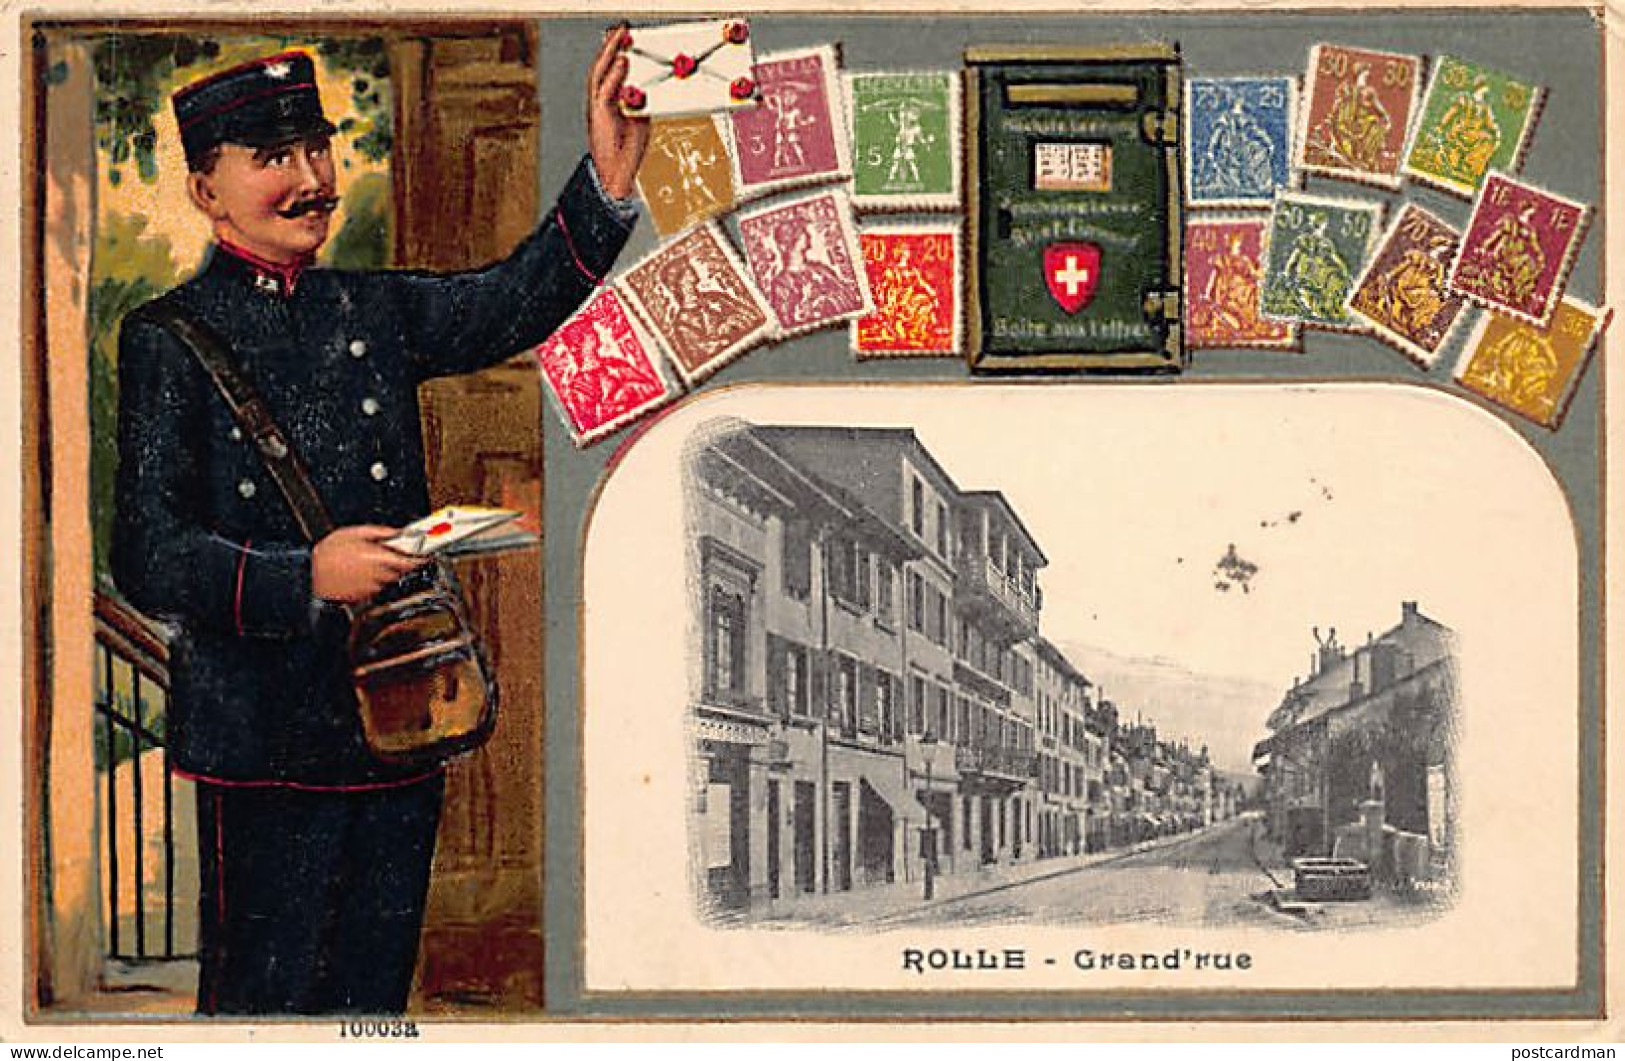 ROLLE (VD) Grand'rue - Postier - Carte Gaufrée - Ed. H. Guggenheim 10003a - Rolle